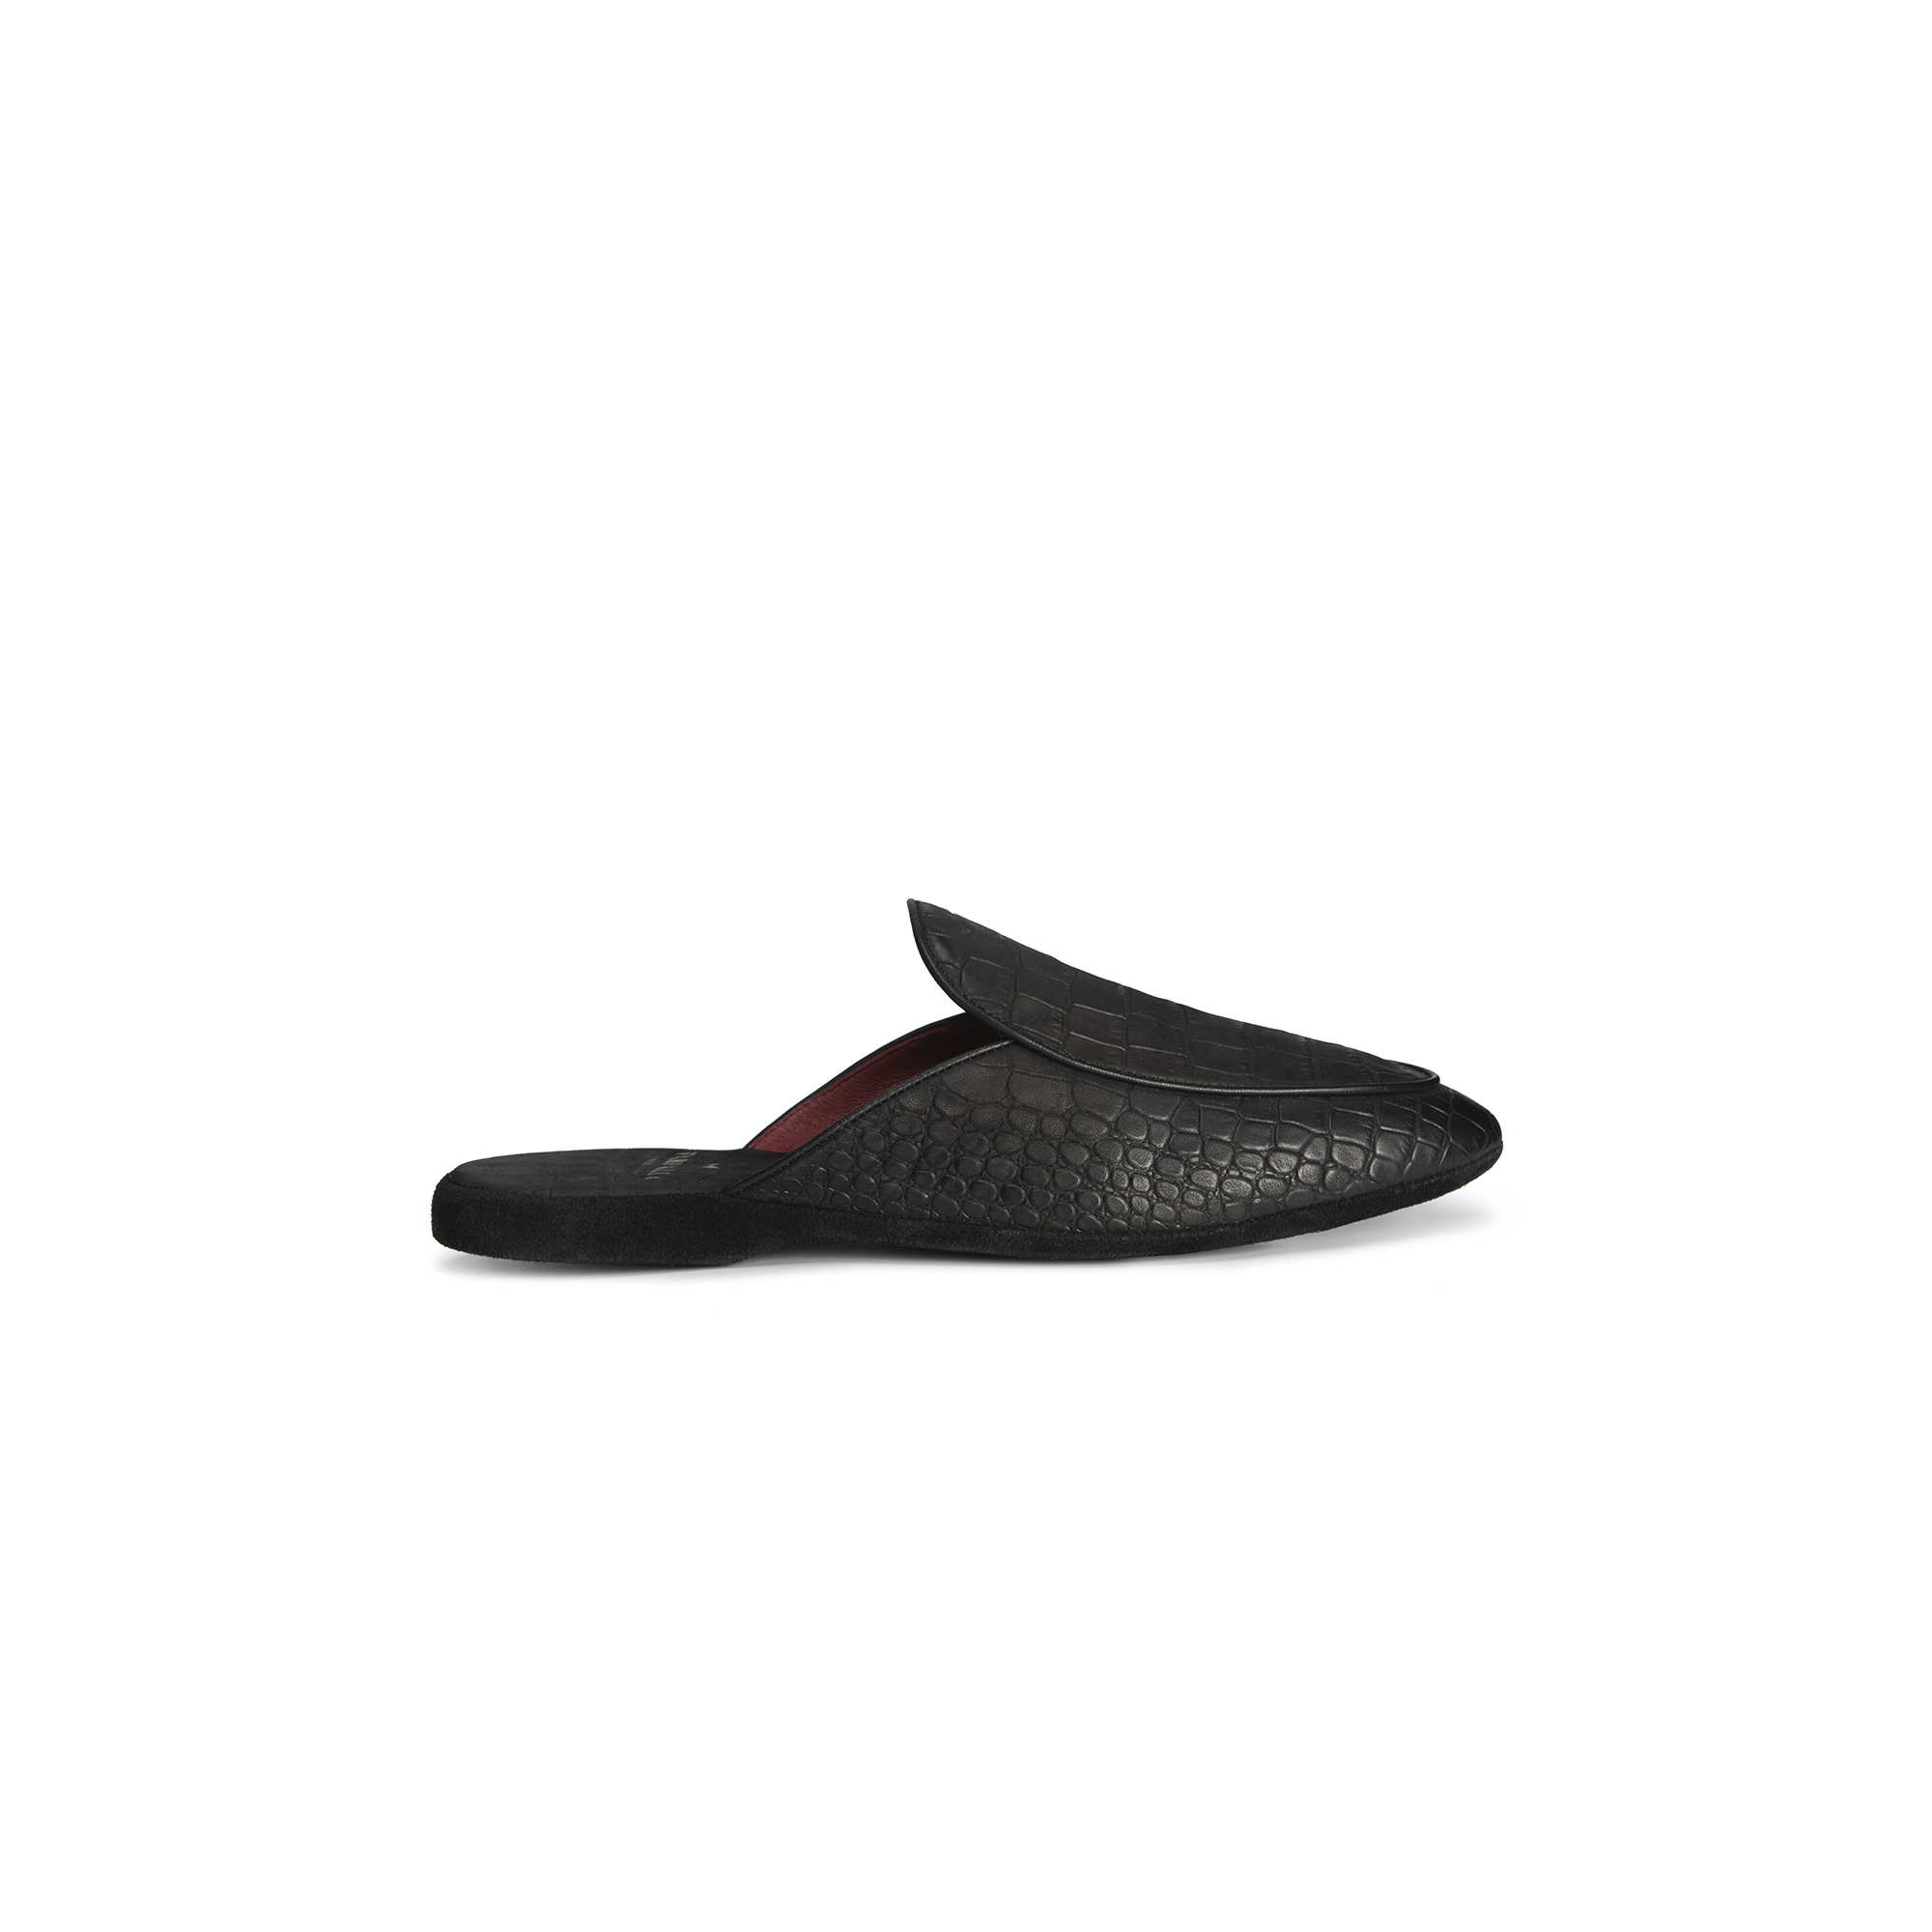 Classic indoor open black crocodile printed leather slipper - Farfalla italian slippers